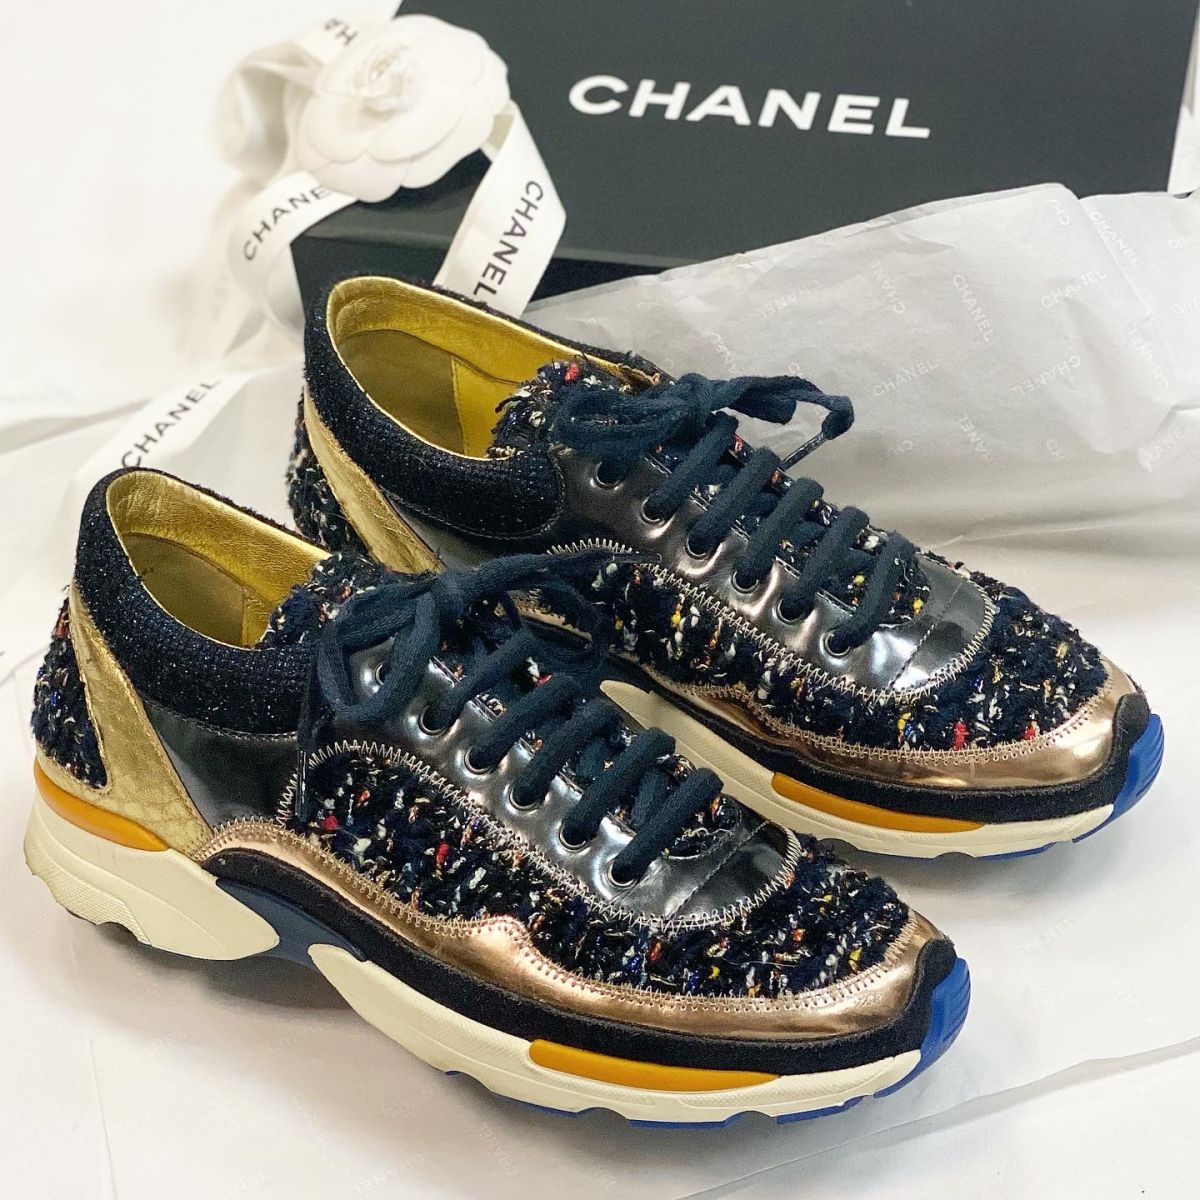 Кроссовки / твид / Chanel размер 39 цена 30 770 руб 